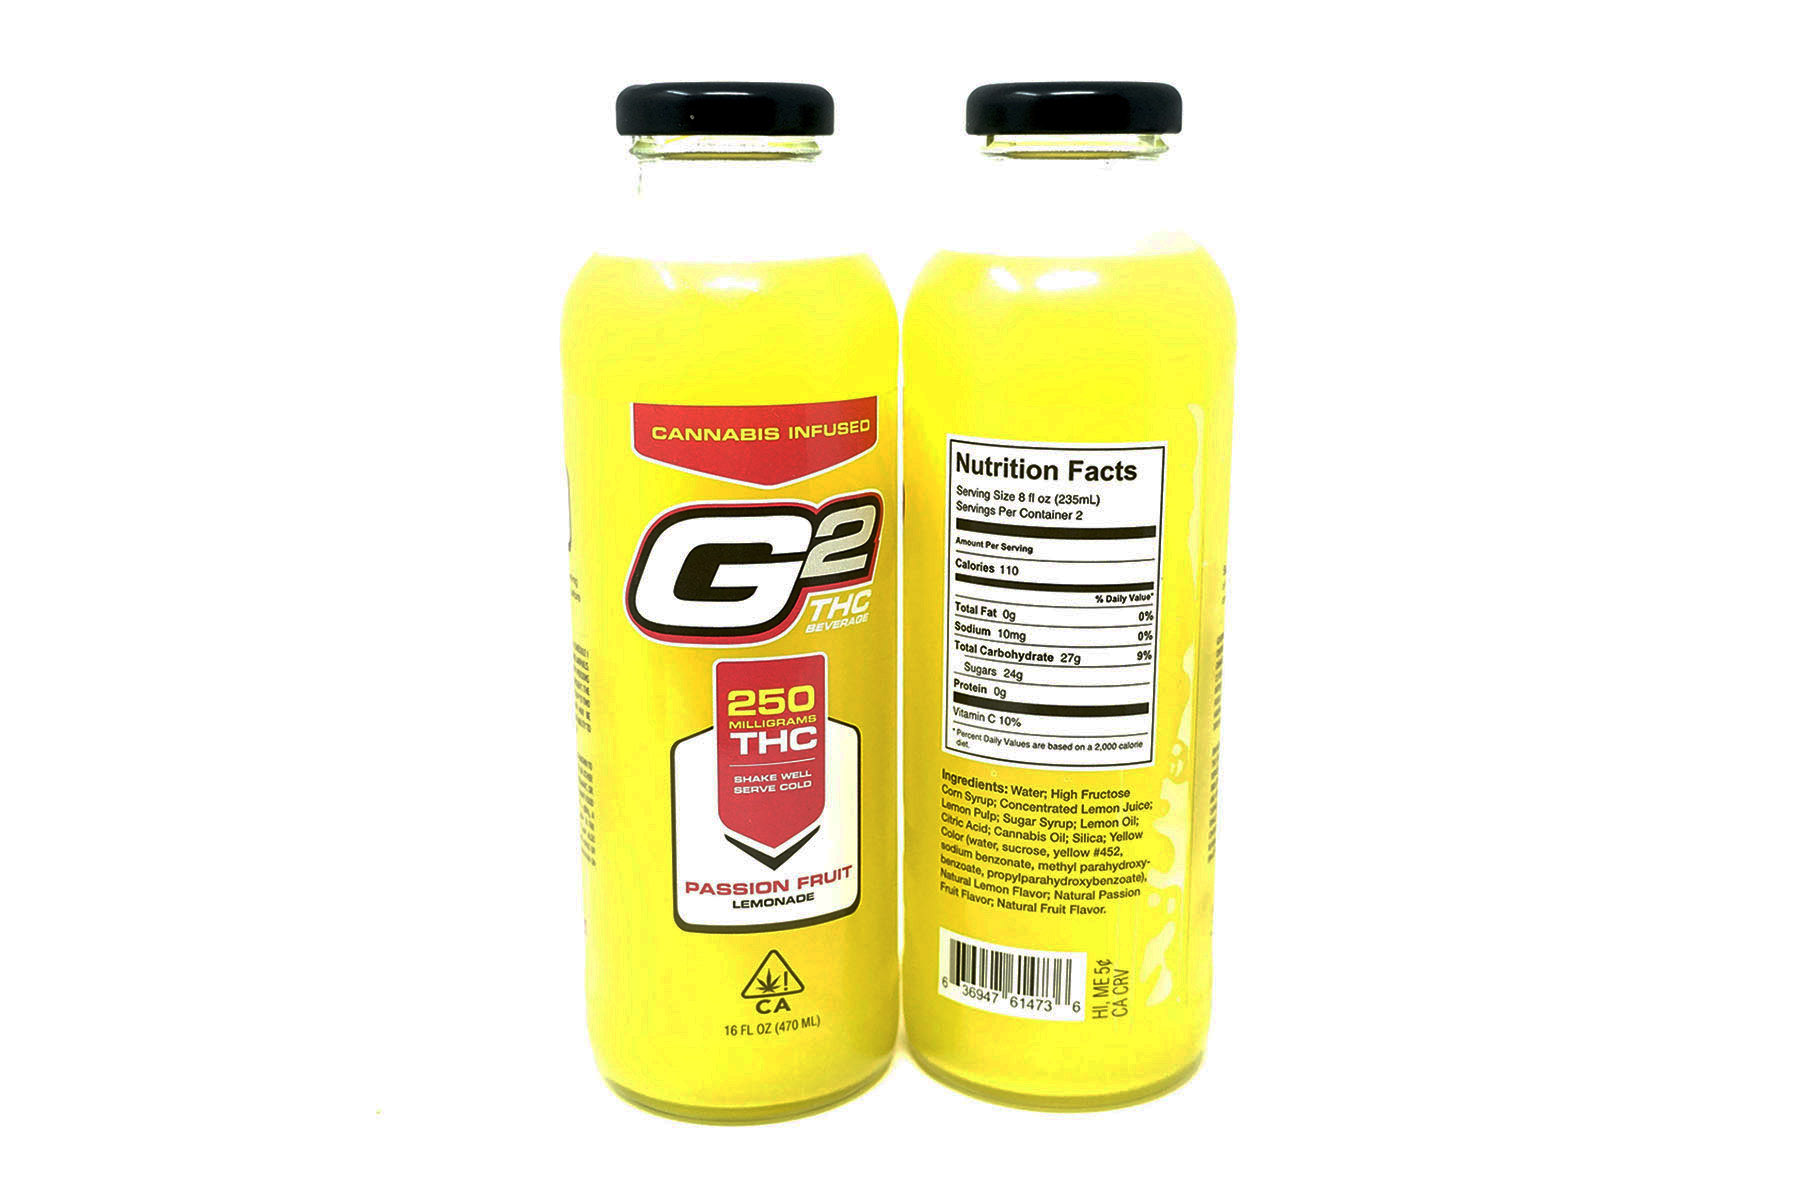 G Drink Original Lemonade (100mg)